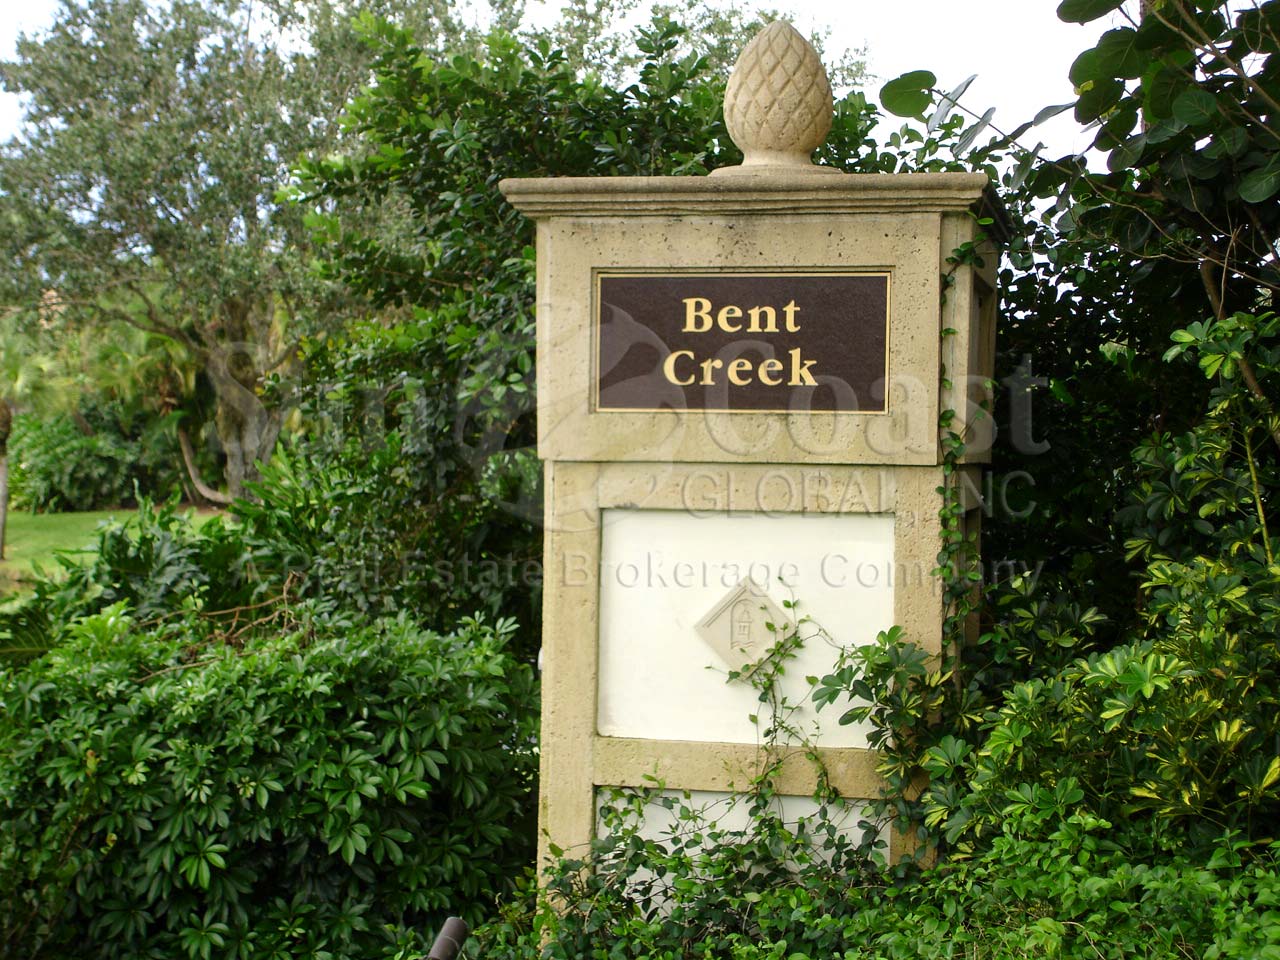 Bent Creek Village Signage